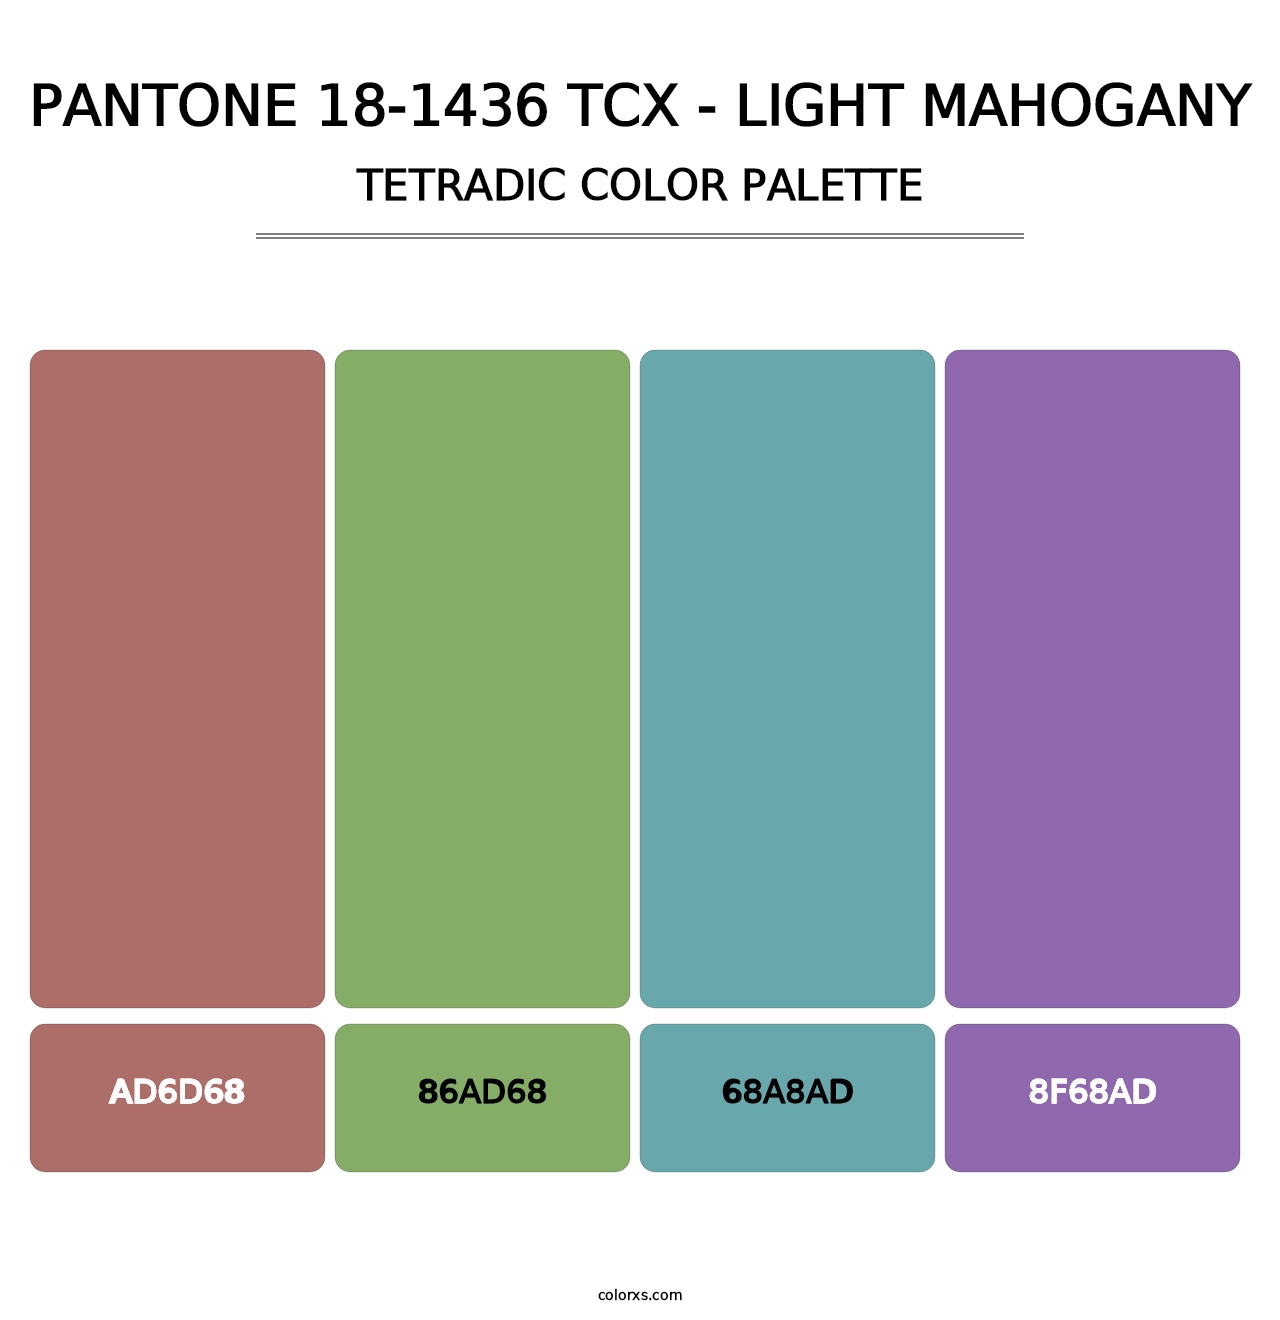 PANTONE 18-1436 TCX - Light Mahogany - Tetradic Color Palette